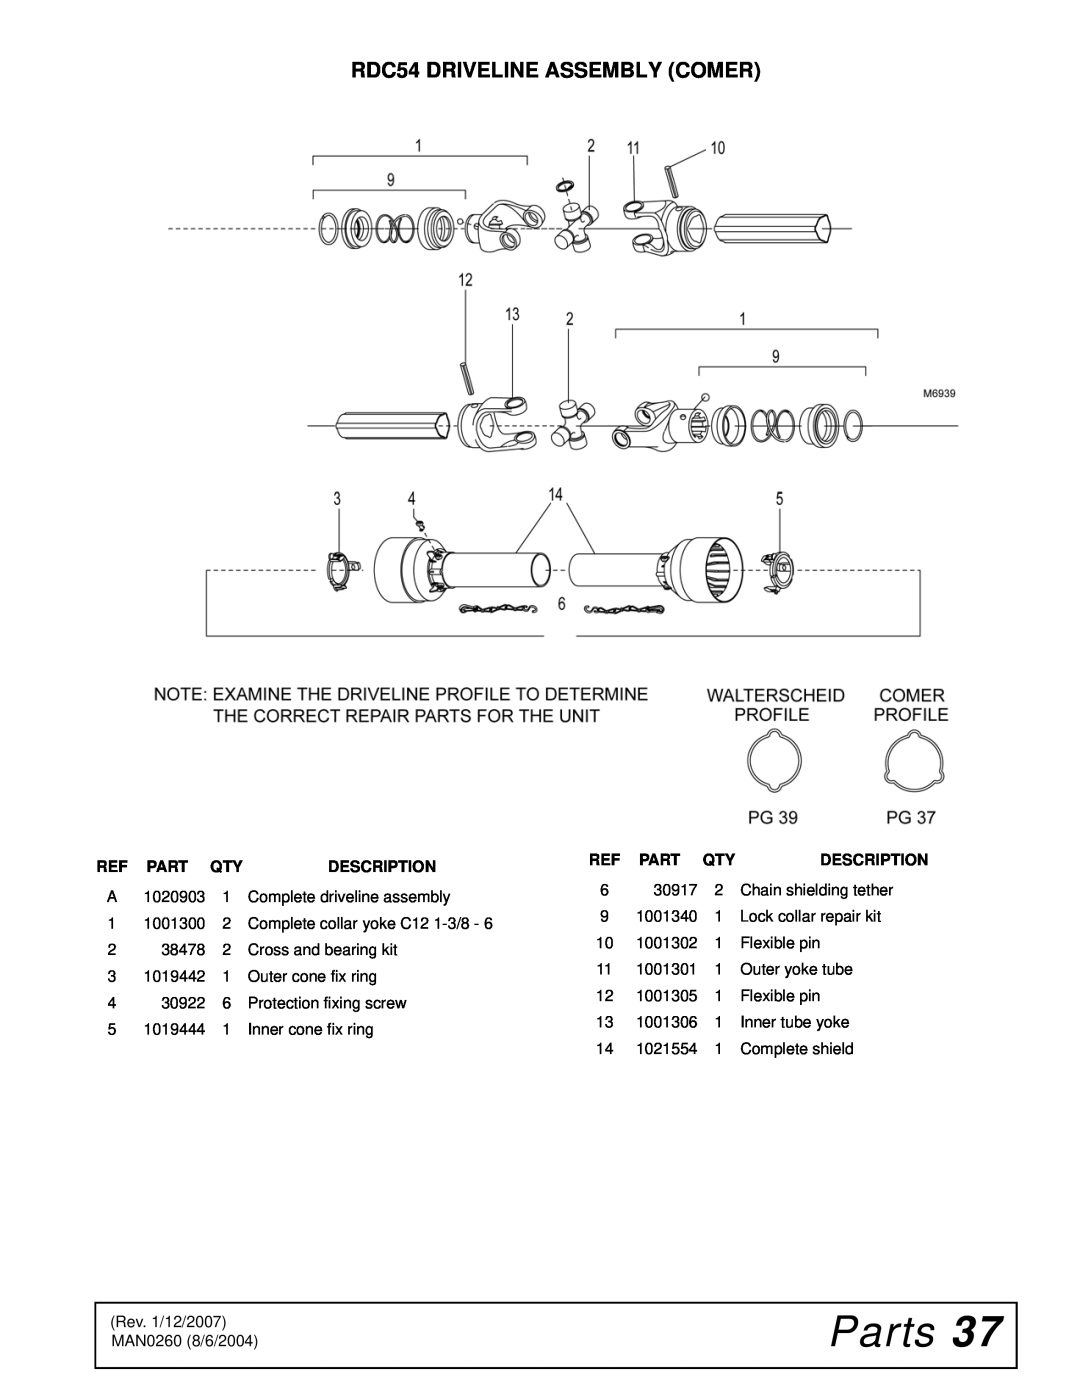 Woods Equipment RD72, RD60 manual RDC54 DRIVELINE ASSEMBLY COMER, Parts, Description 